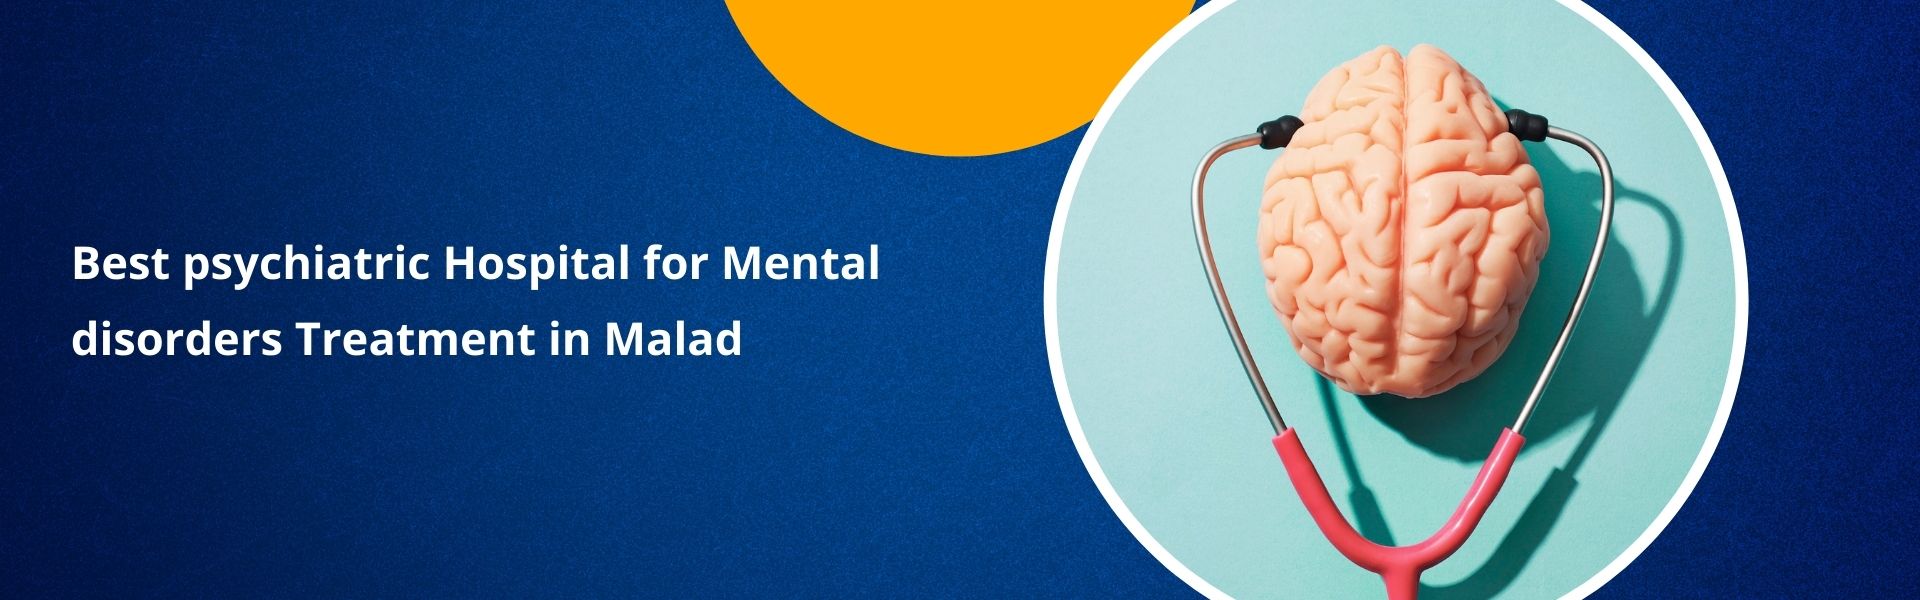 Best psychiatric and Mental Hospital in Malad, Mumbai - Jagruti